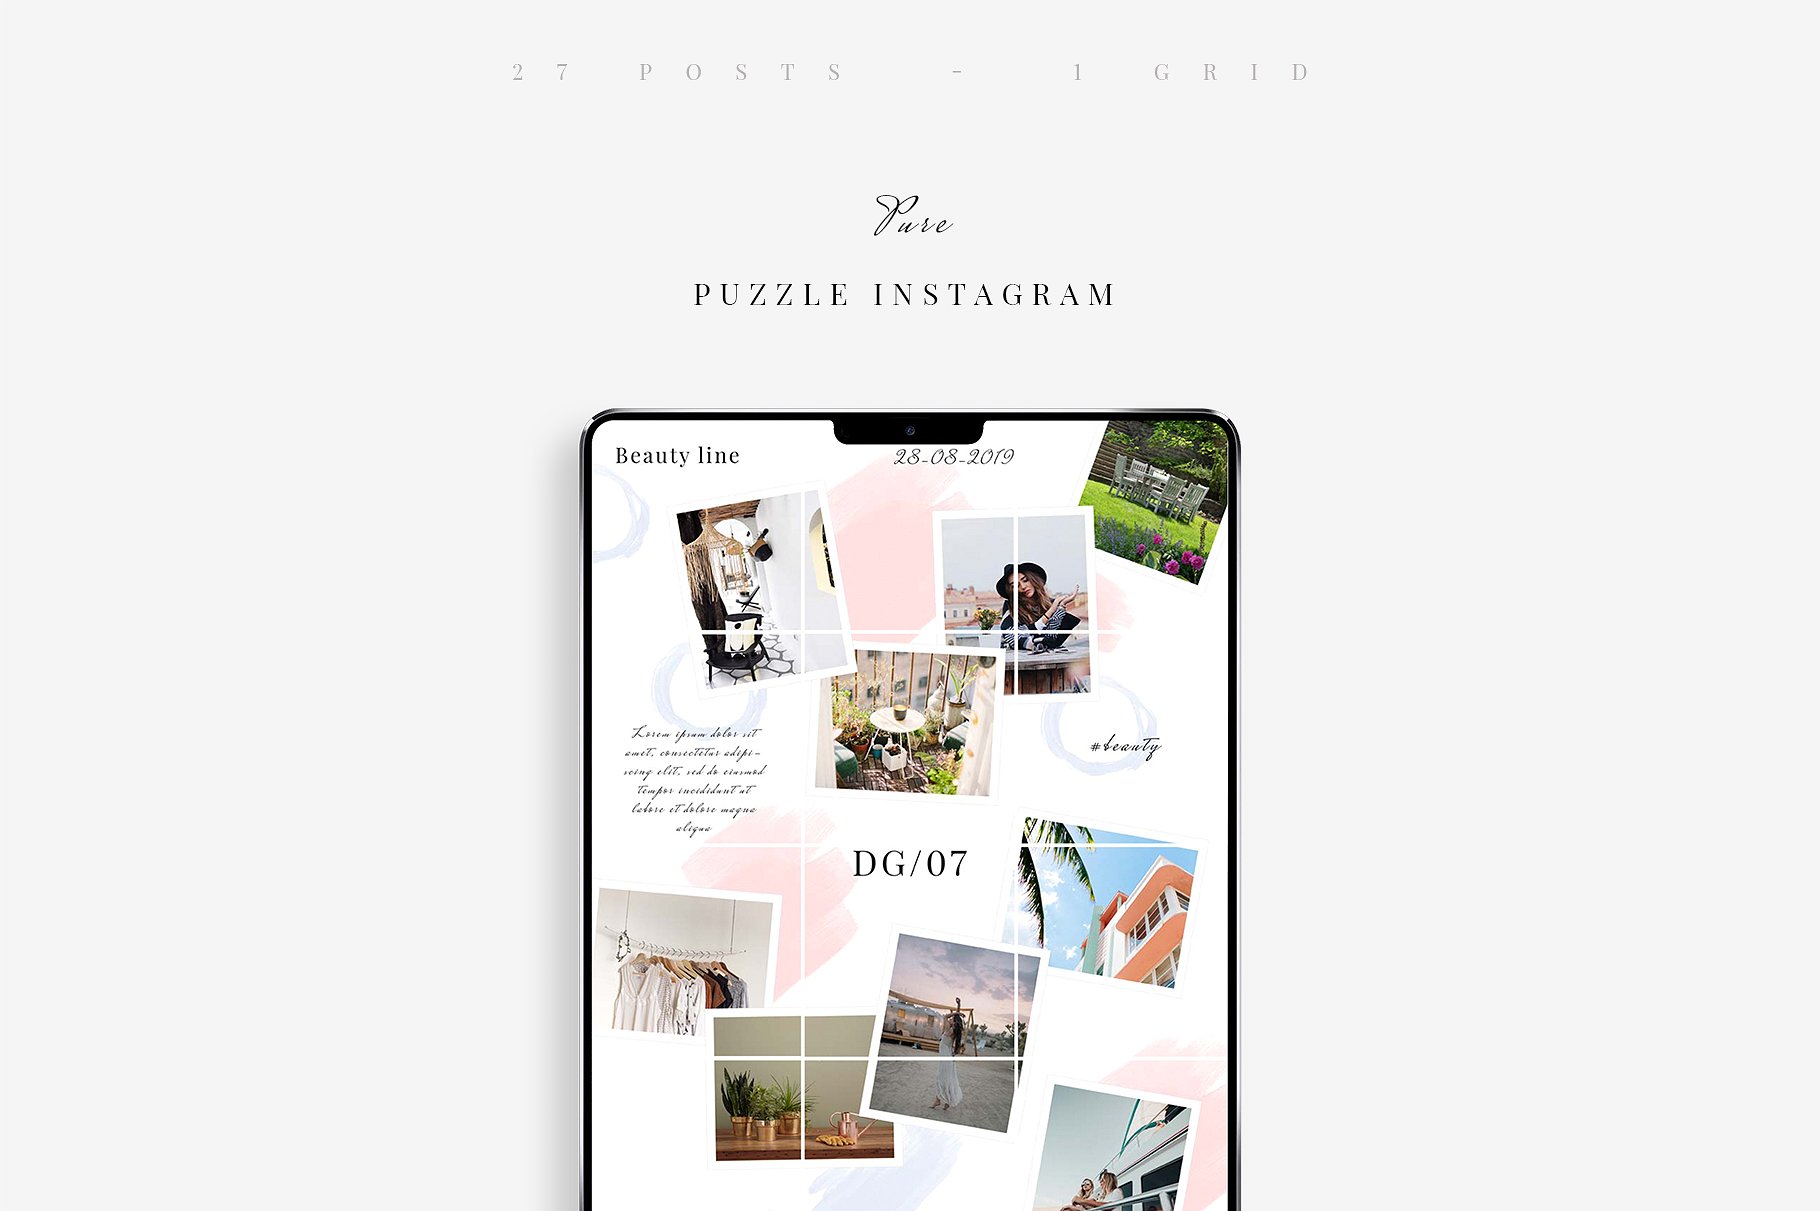 Instagram创意拼贴图片模板素材库精选 Pure Puzzle Instagram插图